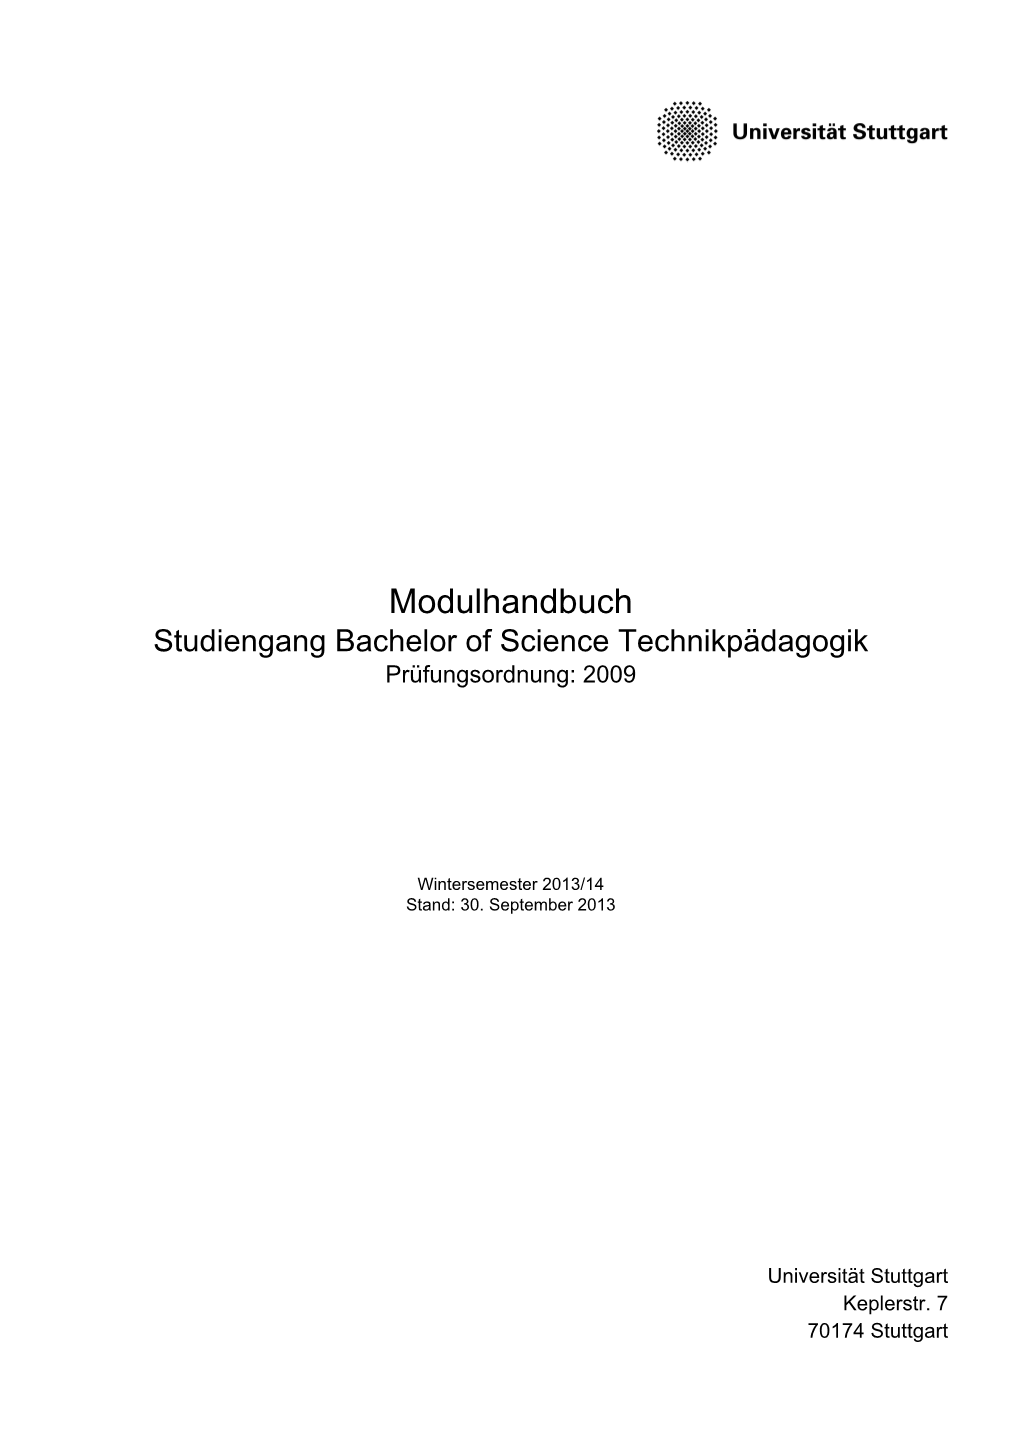 Studiengang Bachelor of Science Technikpädagogik Prüfungsordnung: 2009